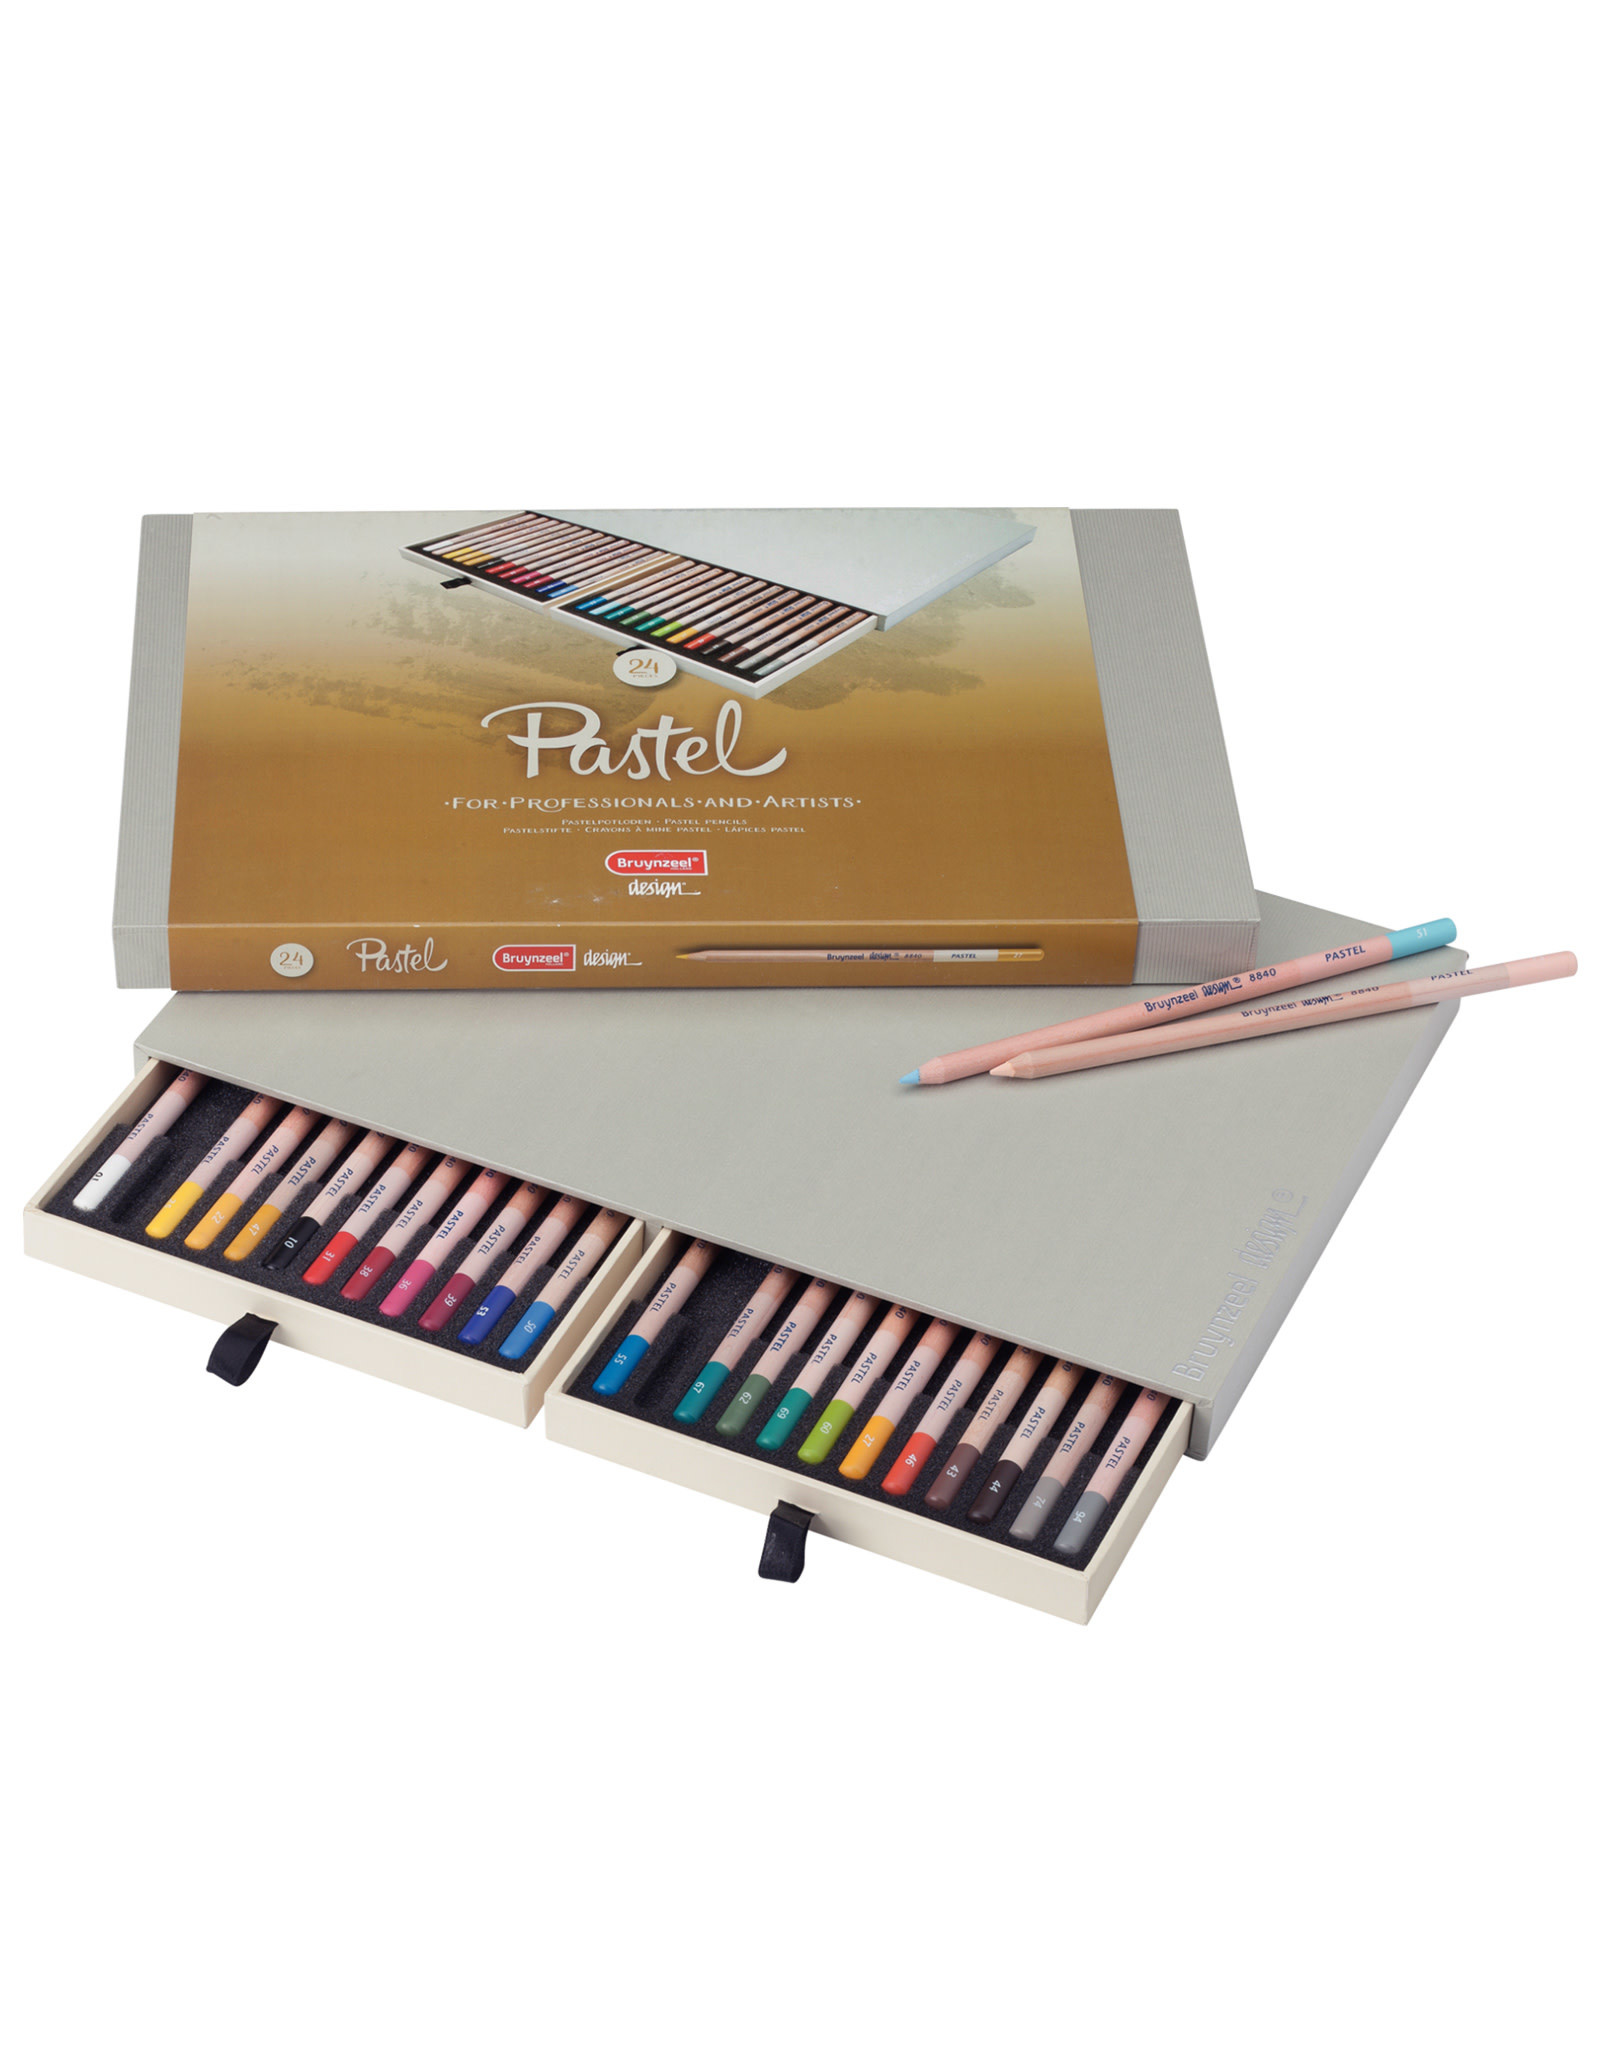 Royal Talens Bruynzeel Design Pastel Box, Set of 24 Pencils